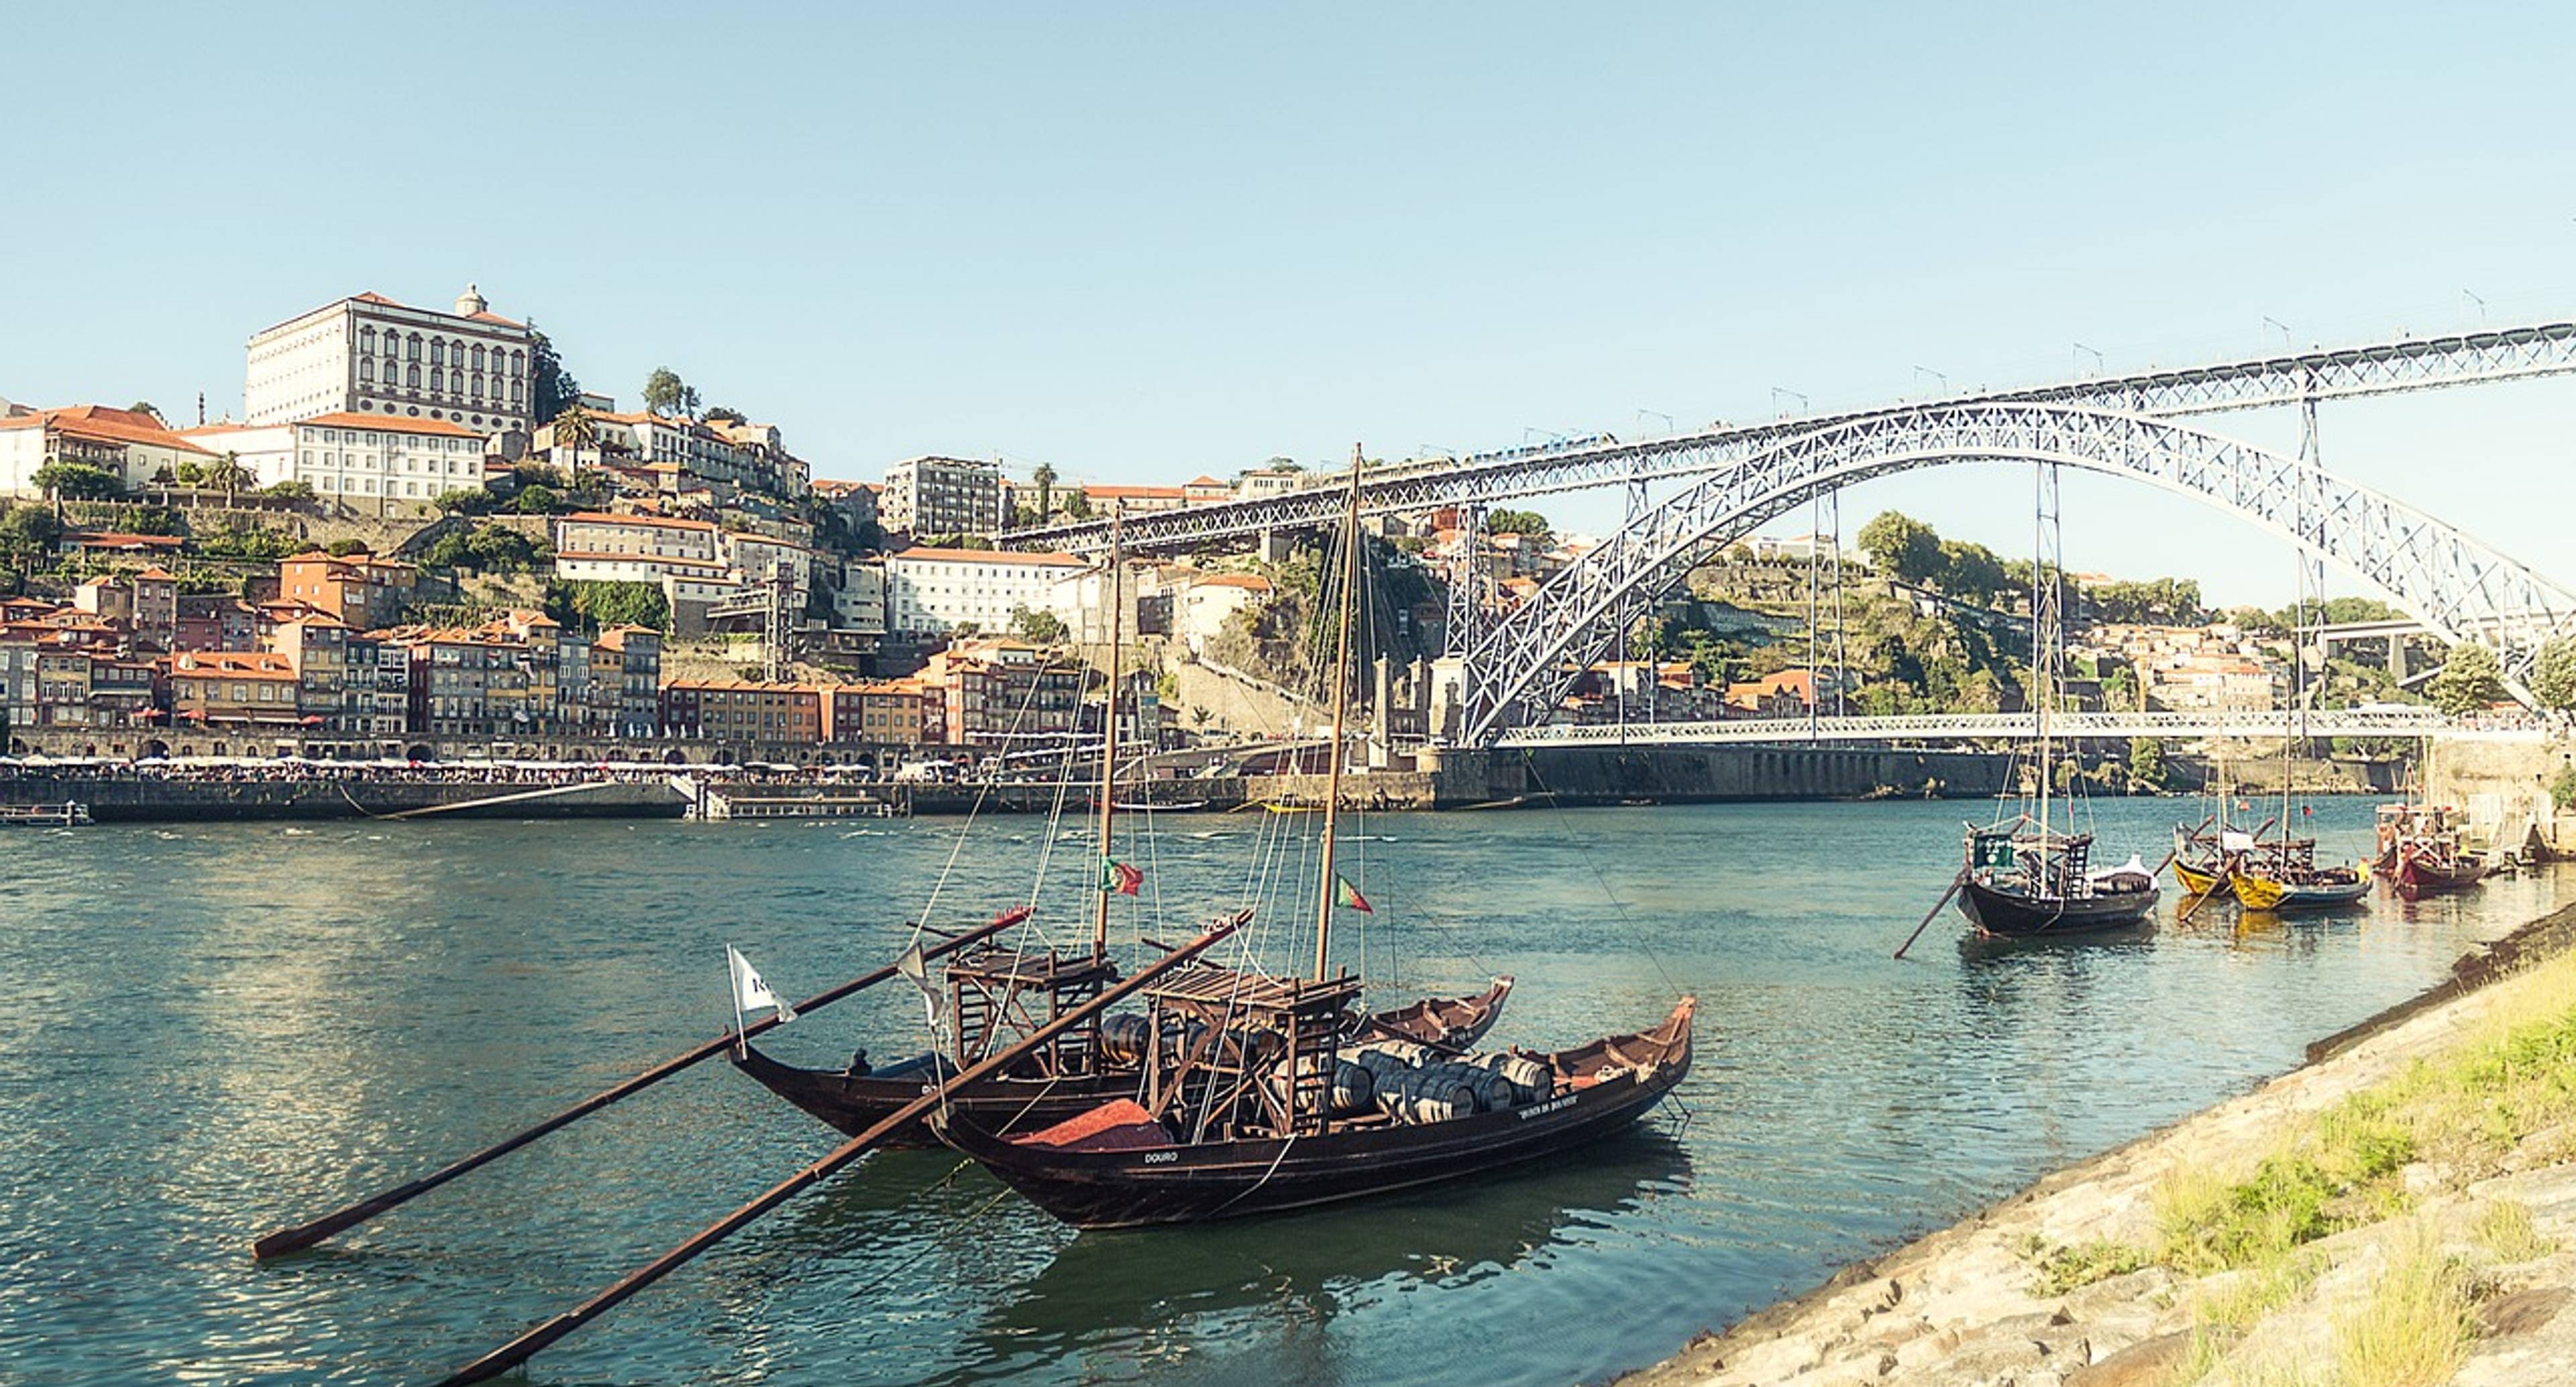 Exploring the surroundings of Porto